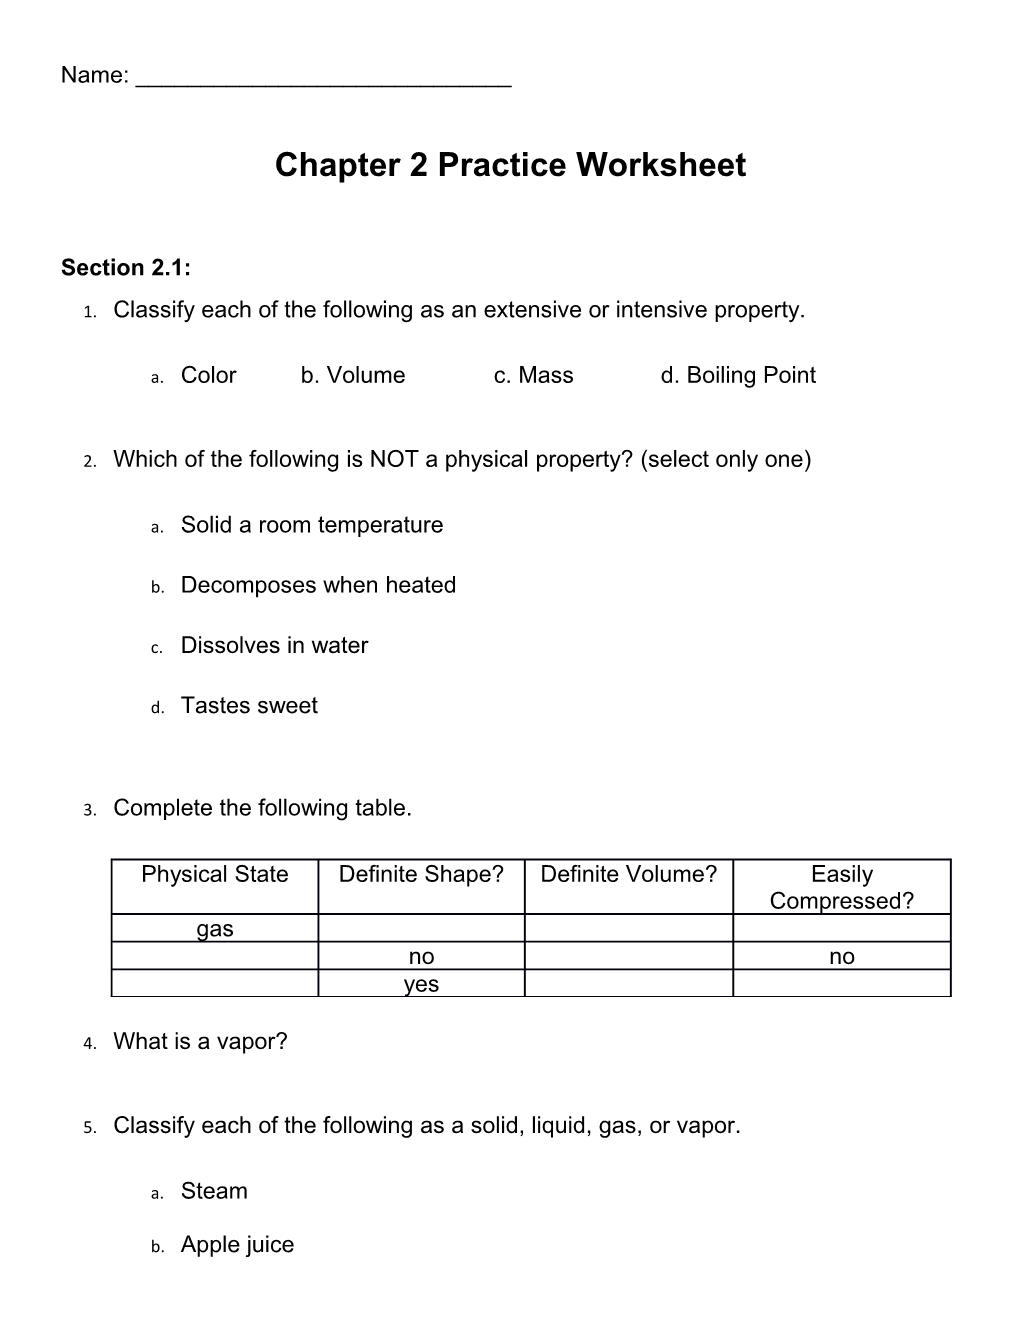 Chapter 2 Practice Worksheet